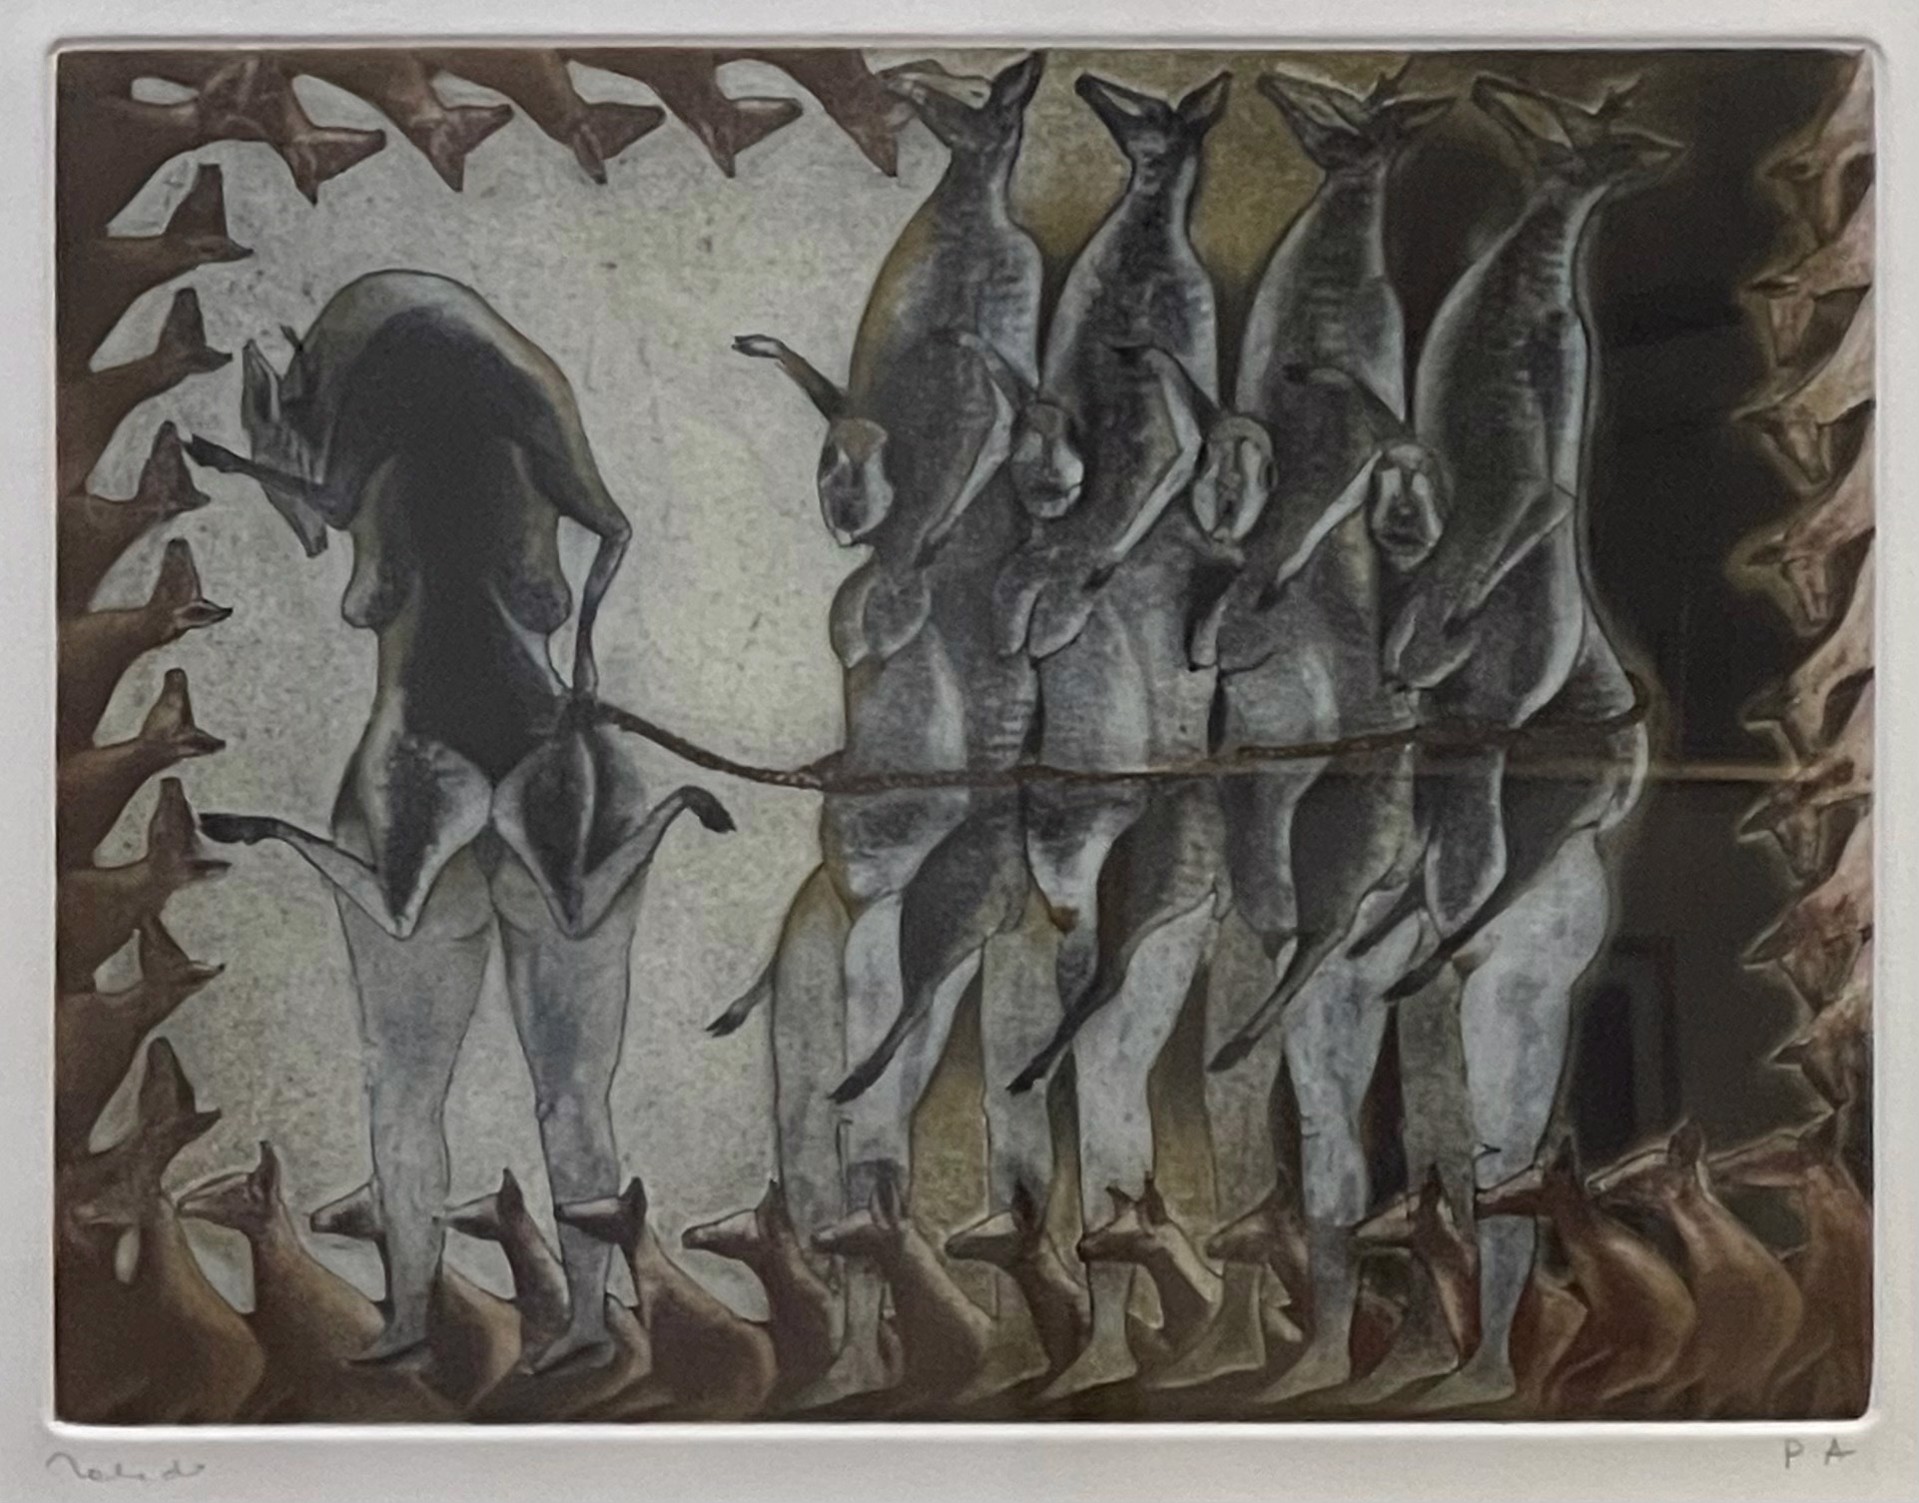 Venados (Deers) by Francisco Toledo